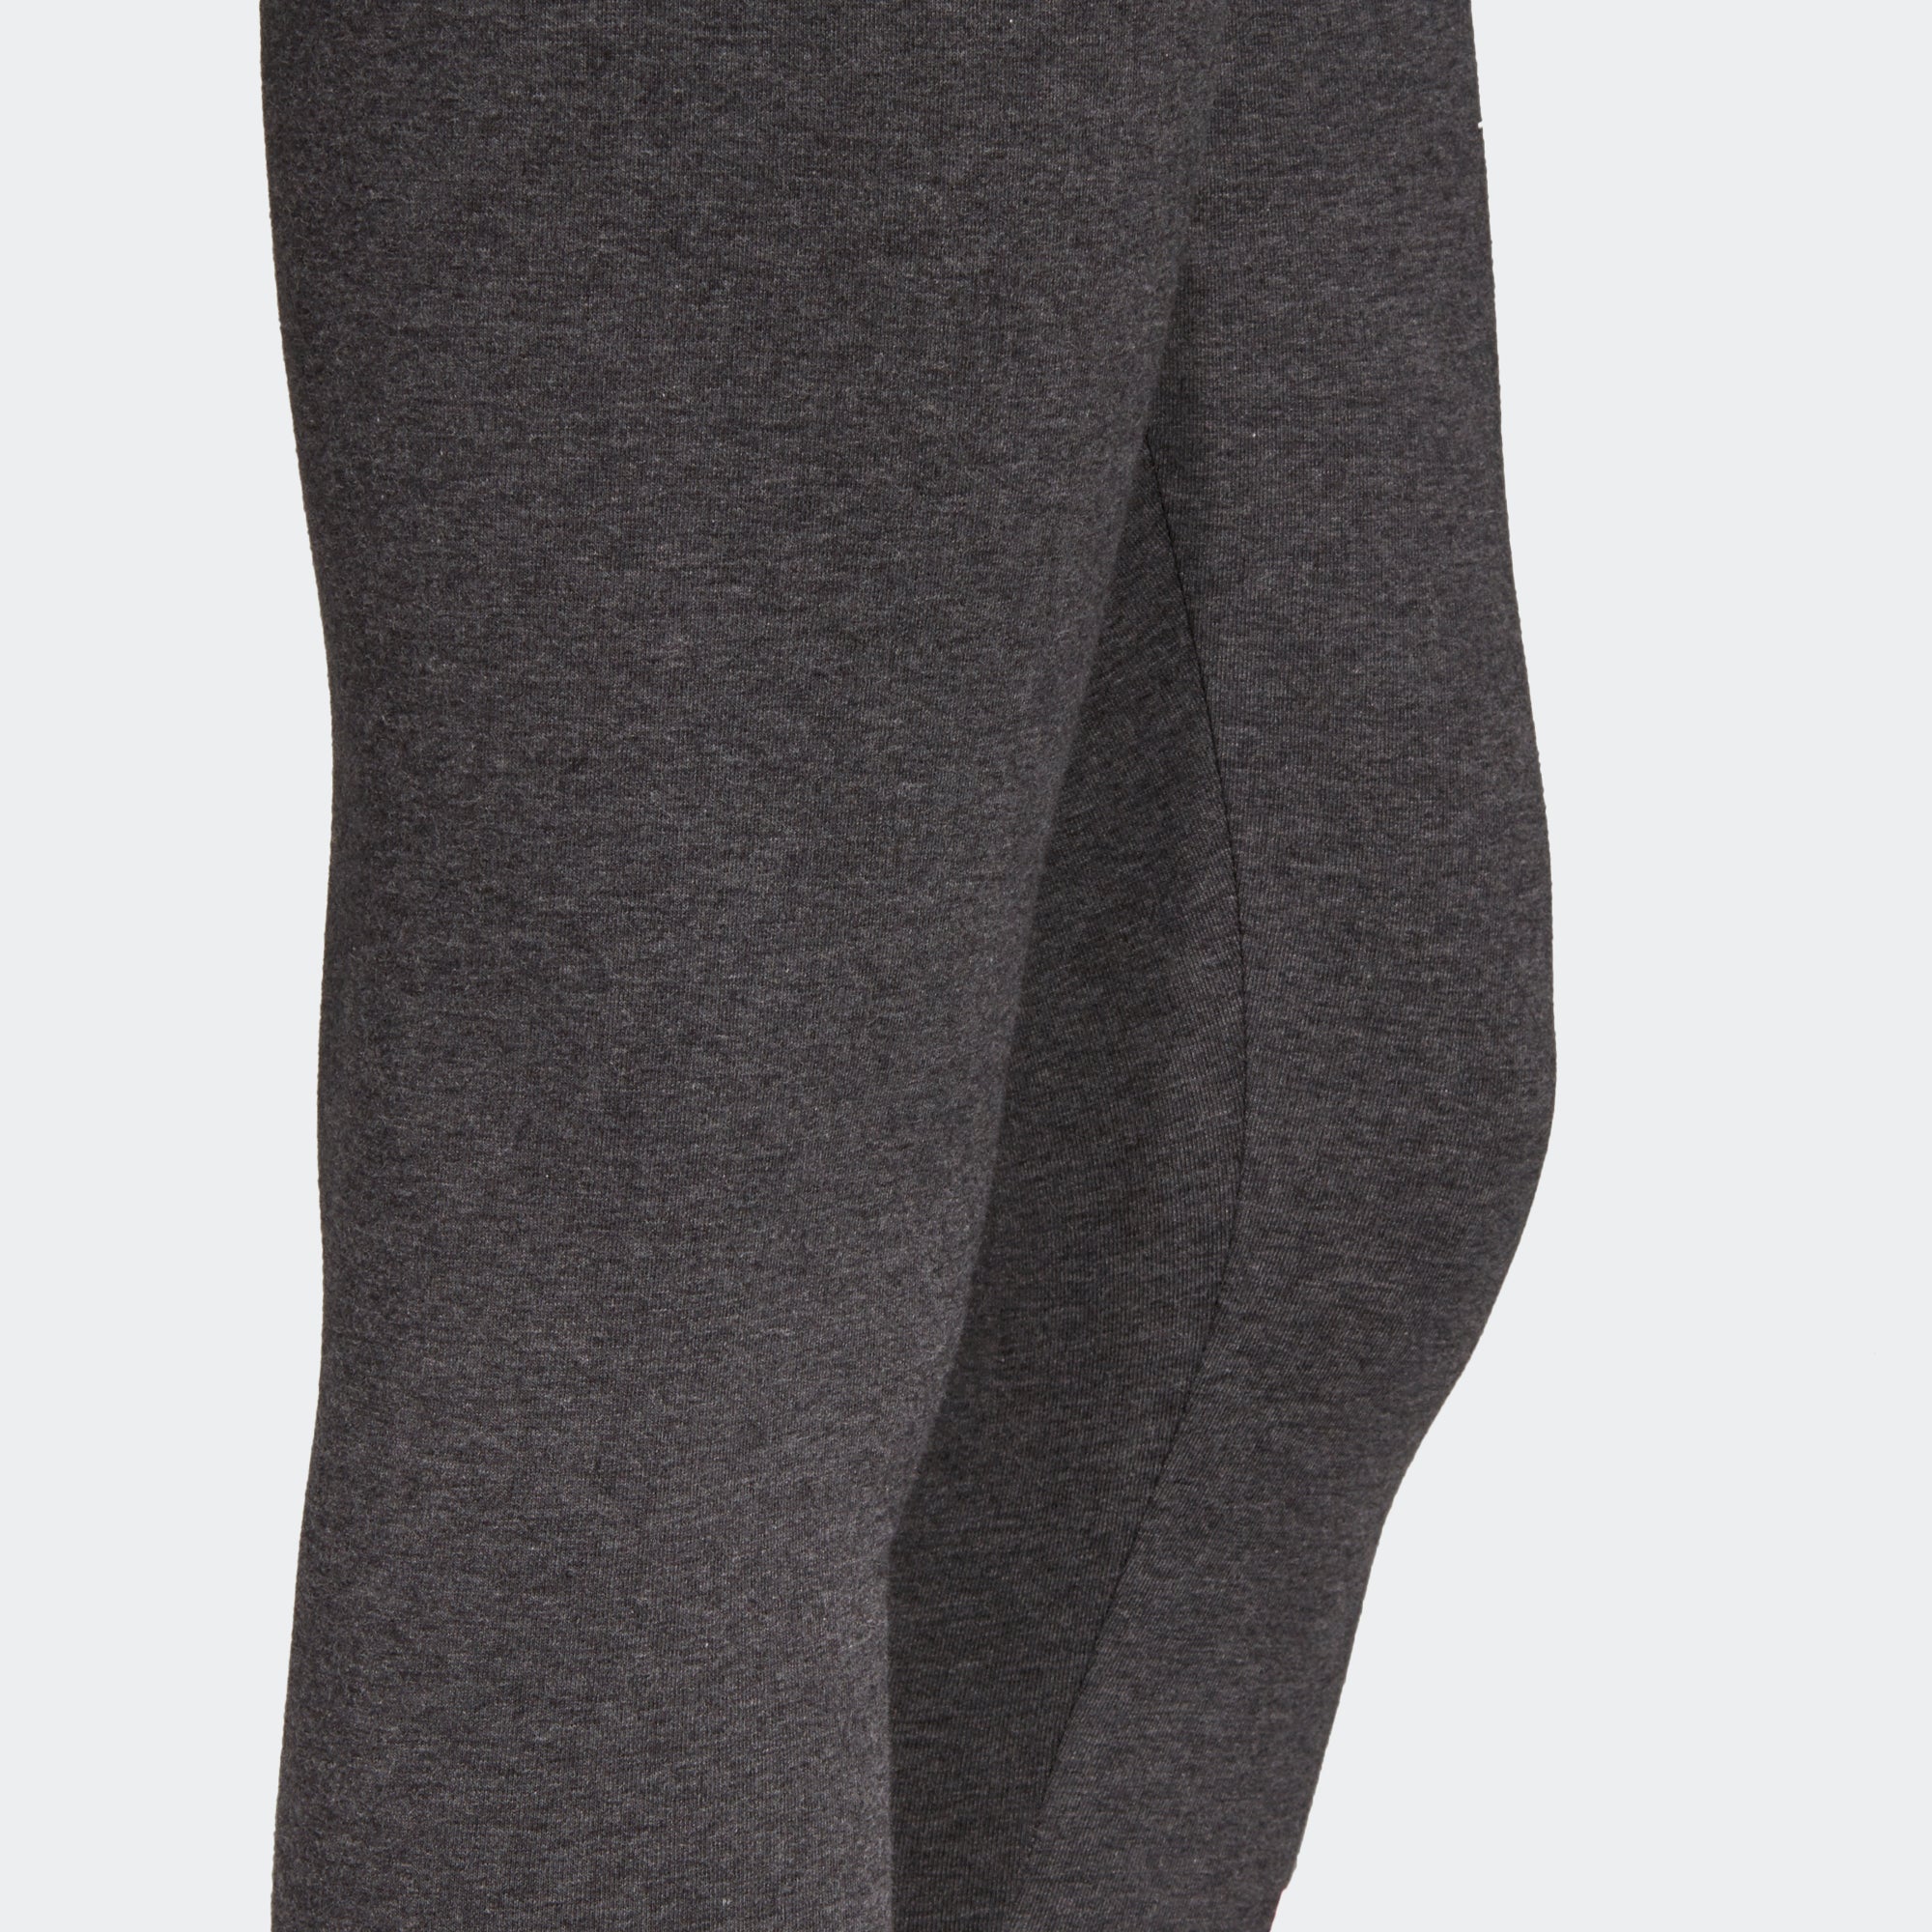 grey adidas leggings womens